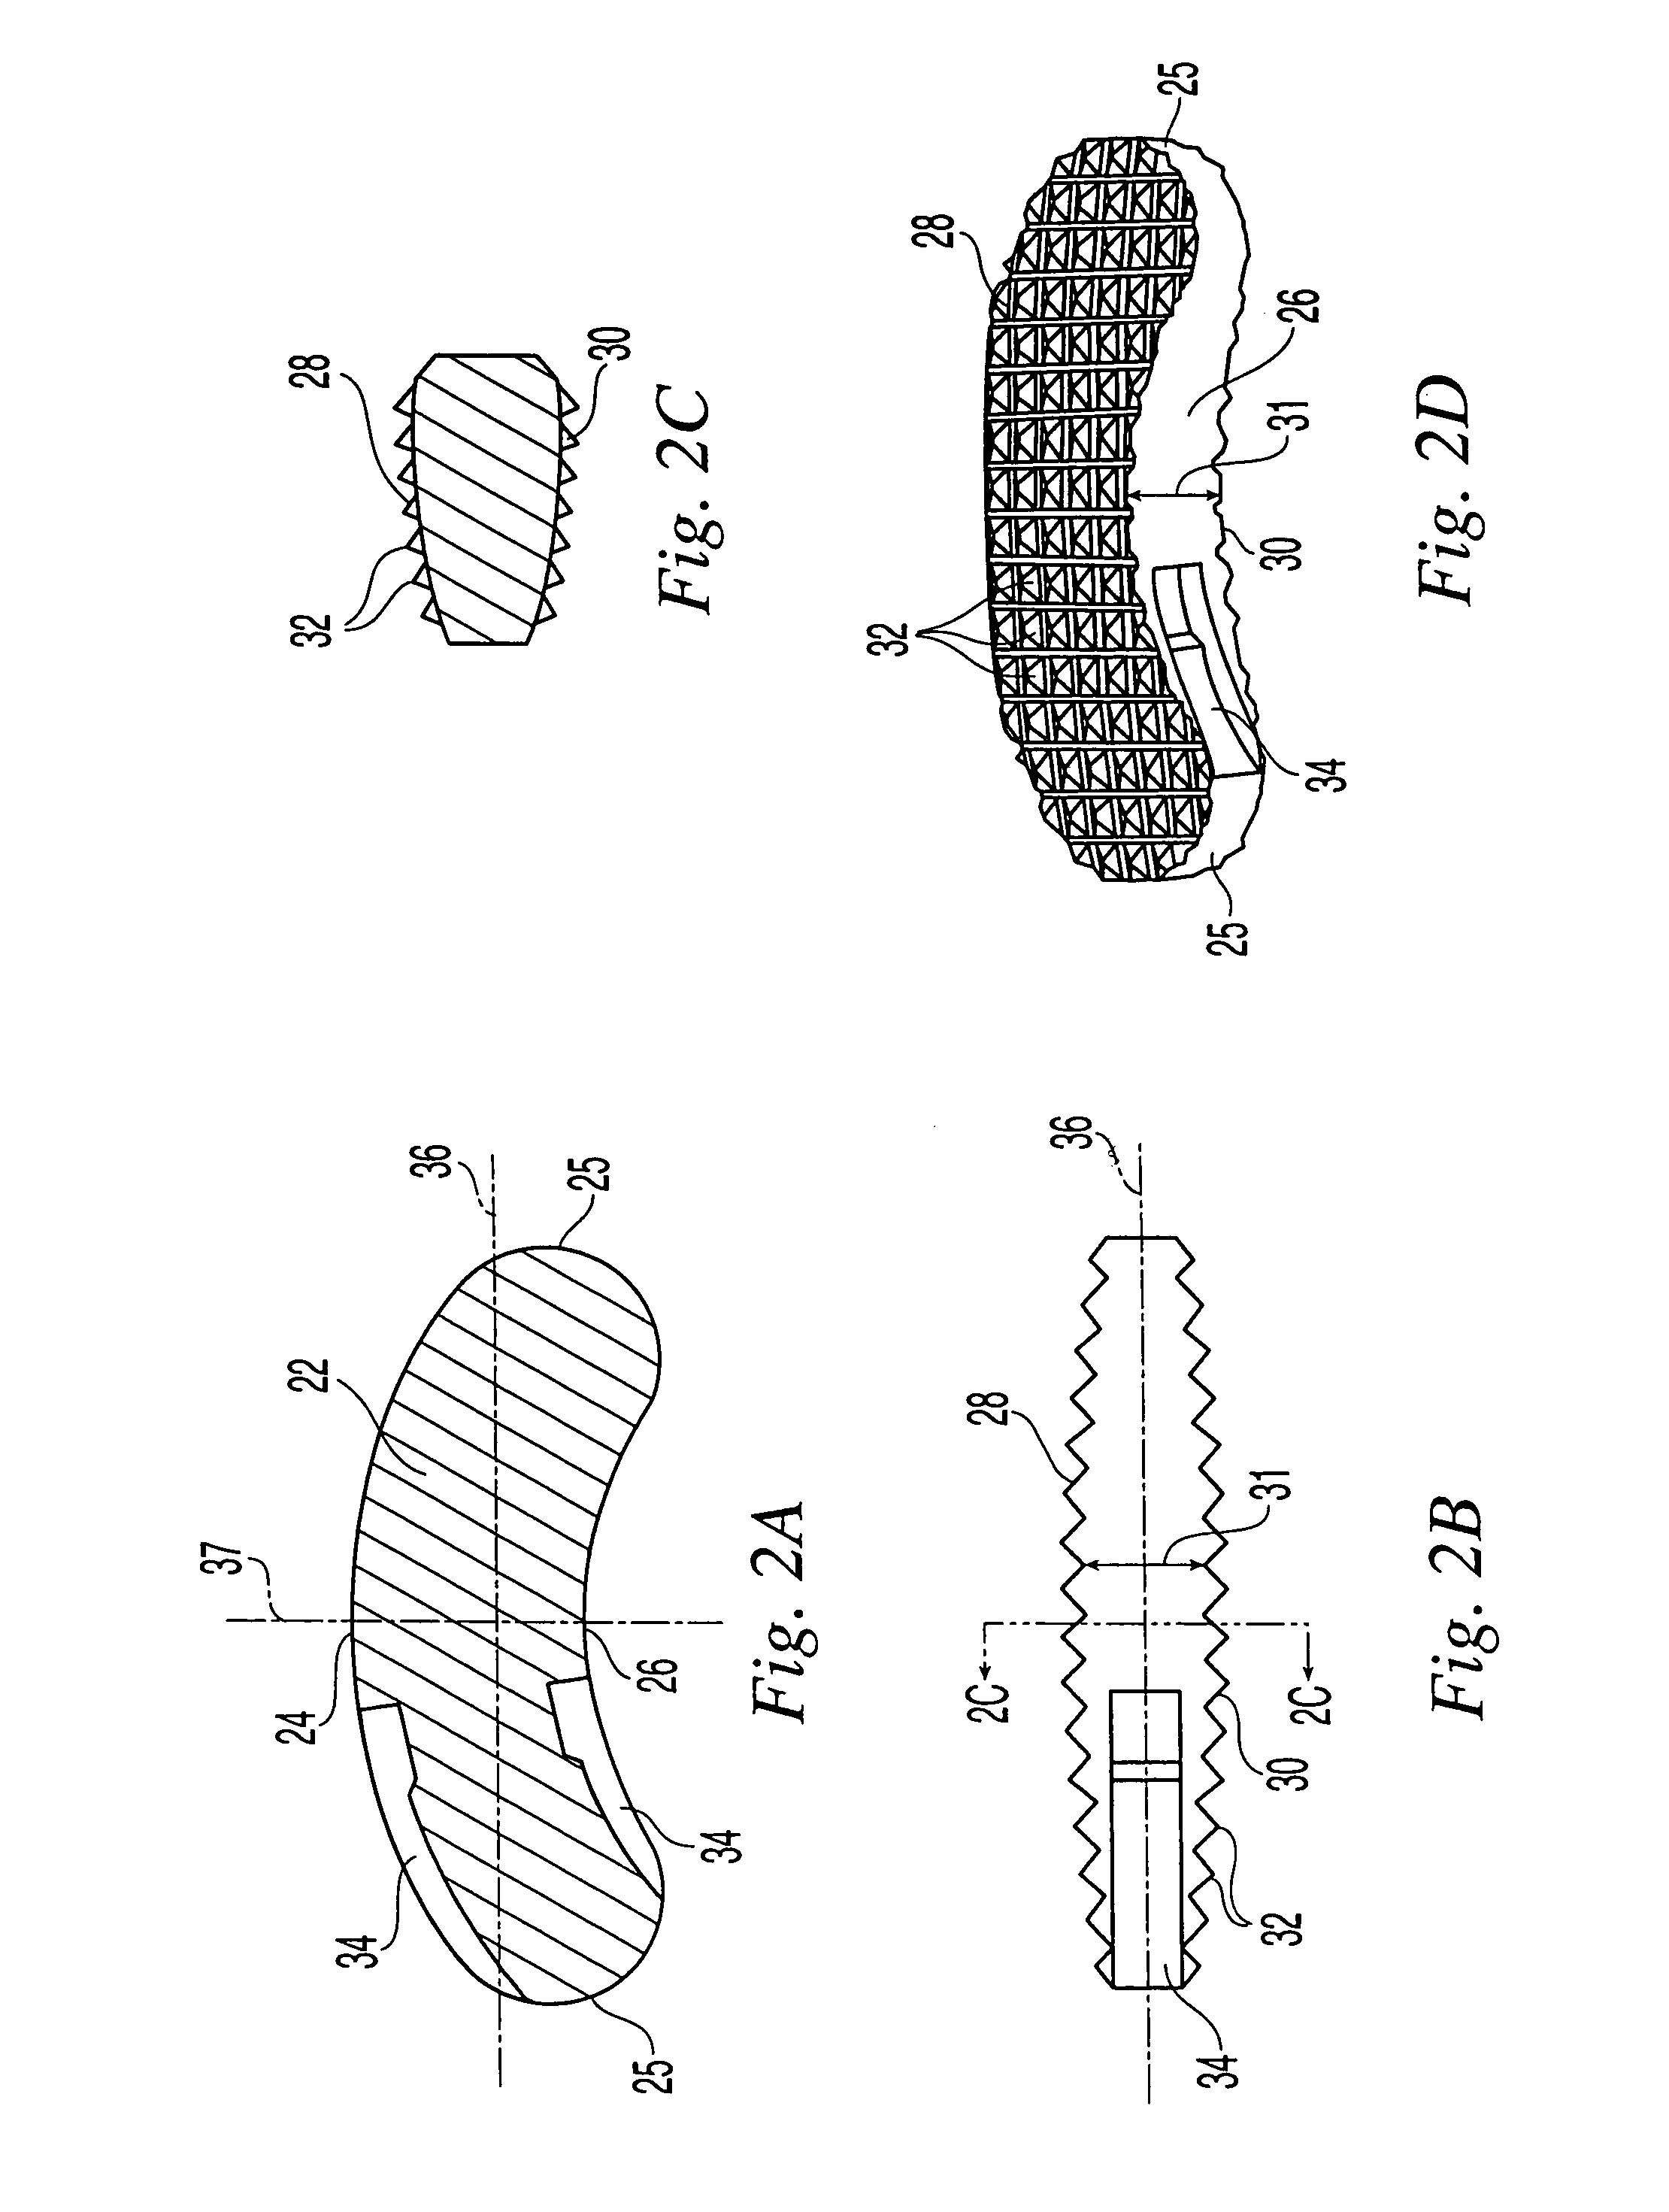 Method of performing a transforaminal posterior lumber interbody fusion procedure